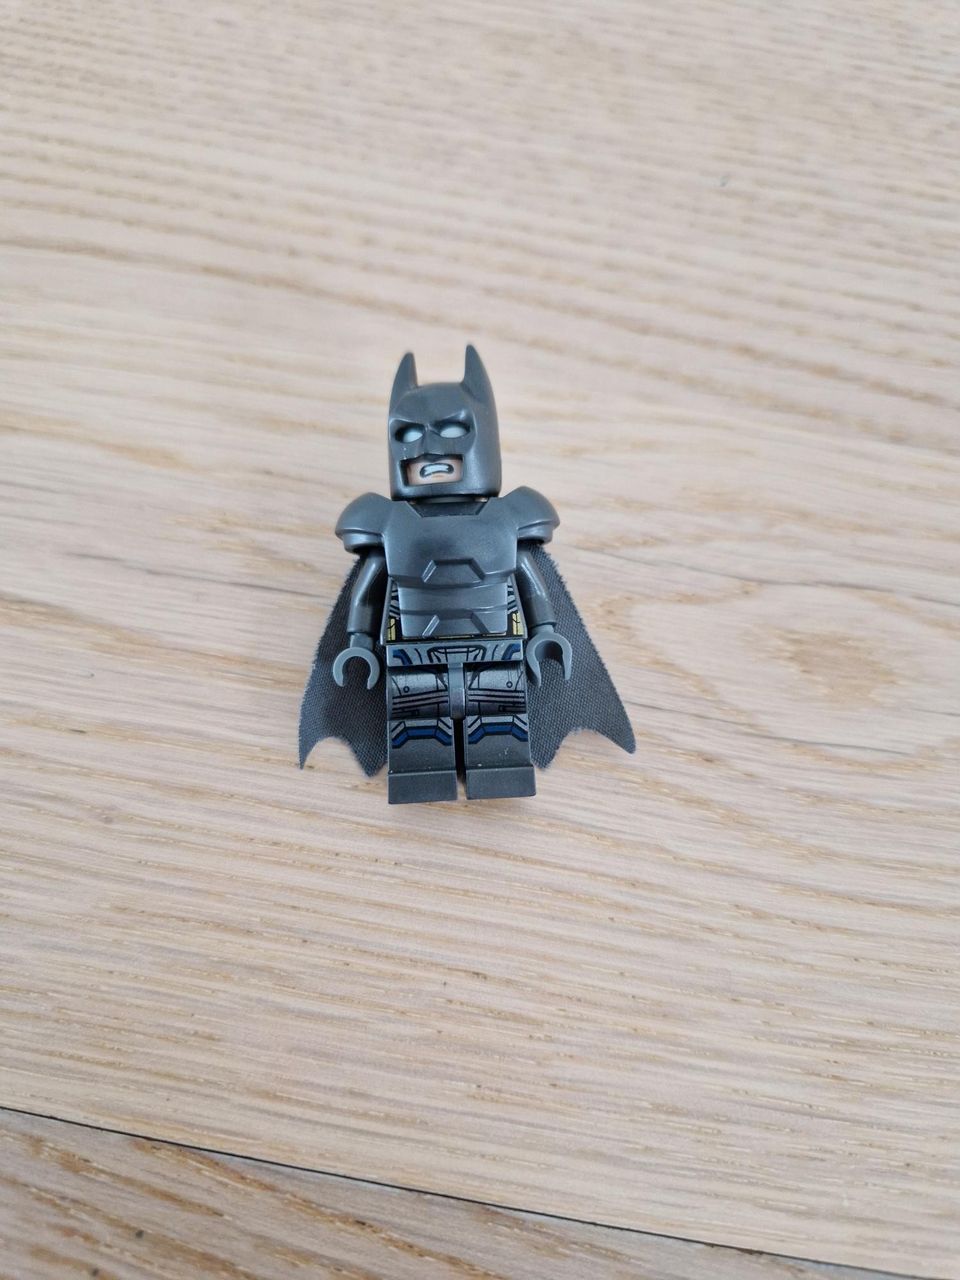 Lego Batman armored minifiguuri sh217